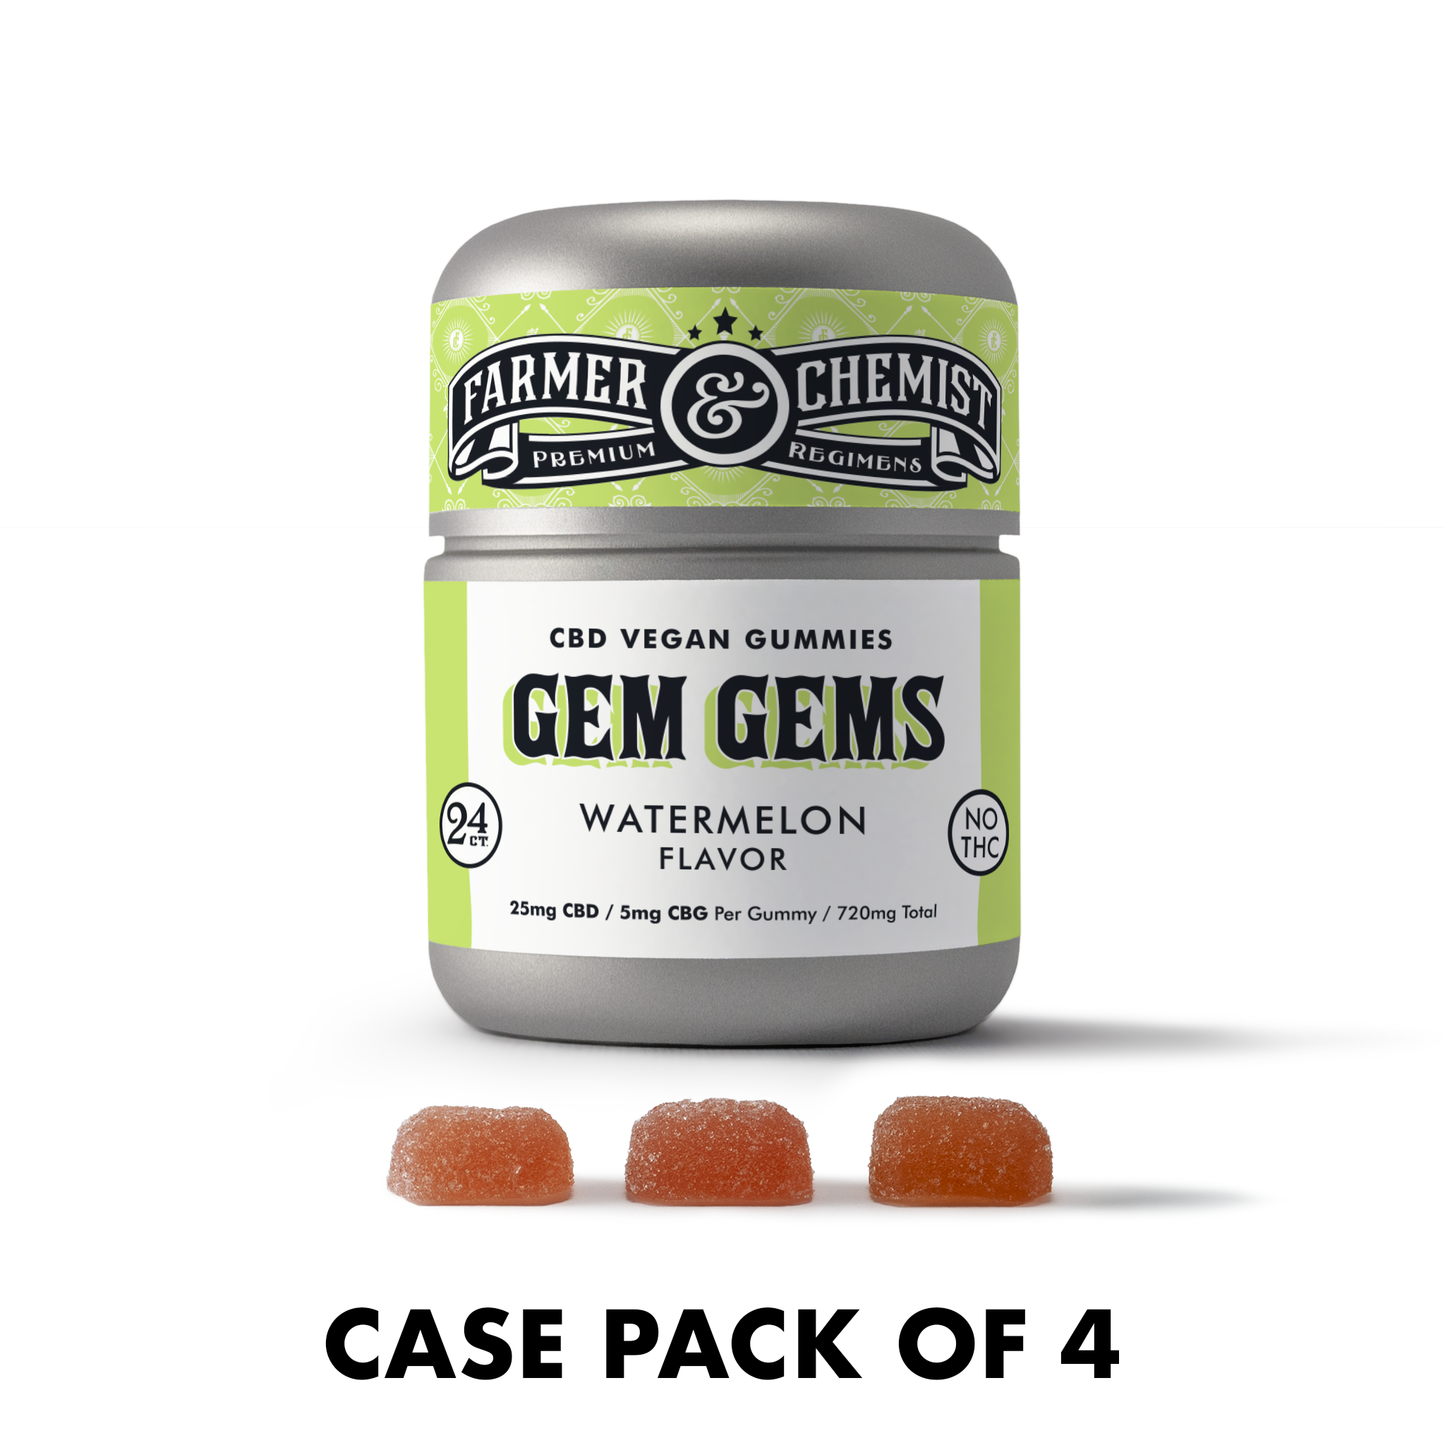 GEM GEMS - 24ct 25mg CBD / 5mg CBG Watermelon Flavor (Case pack of 4)